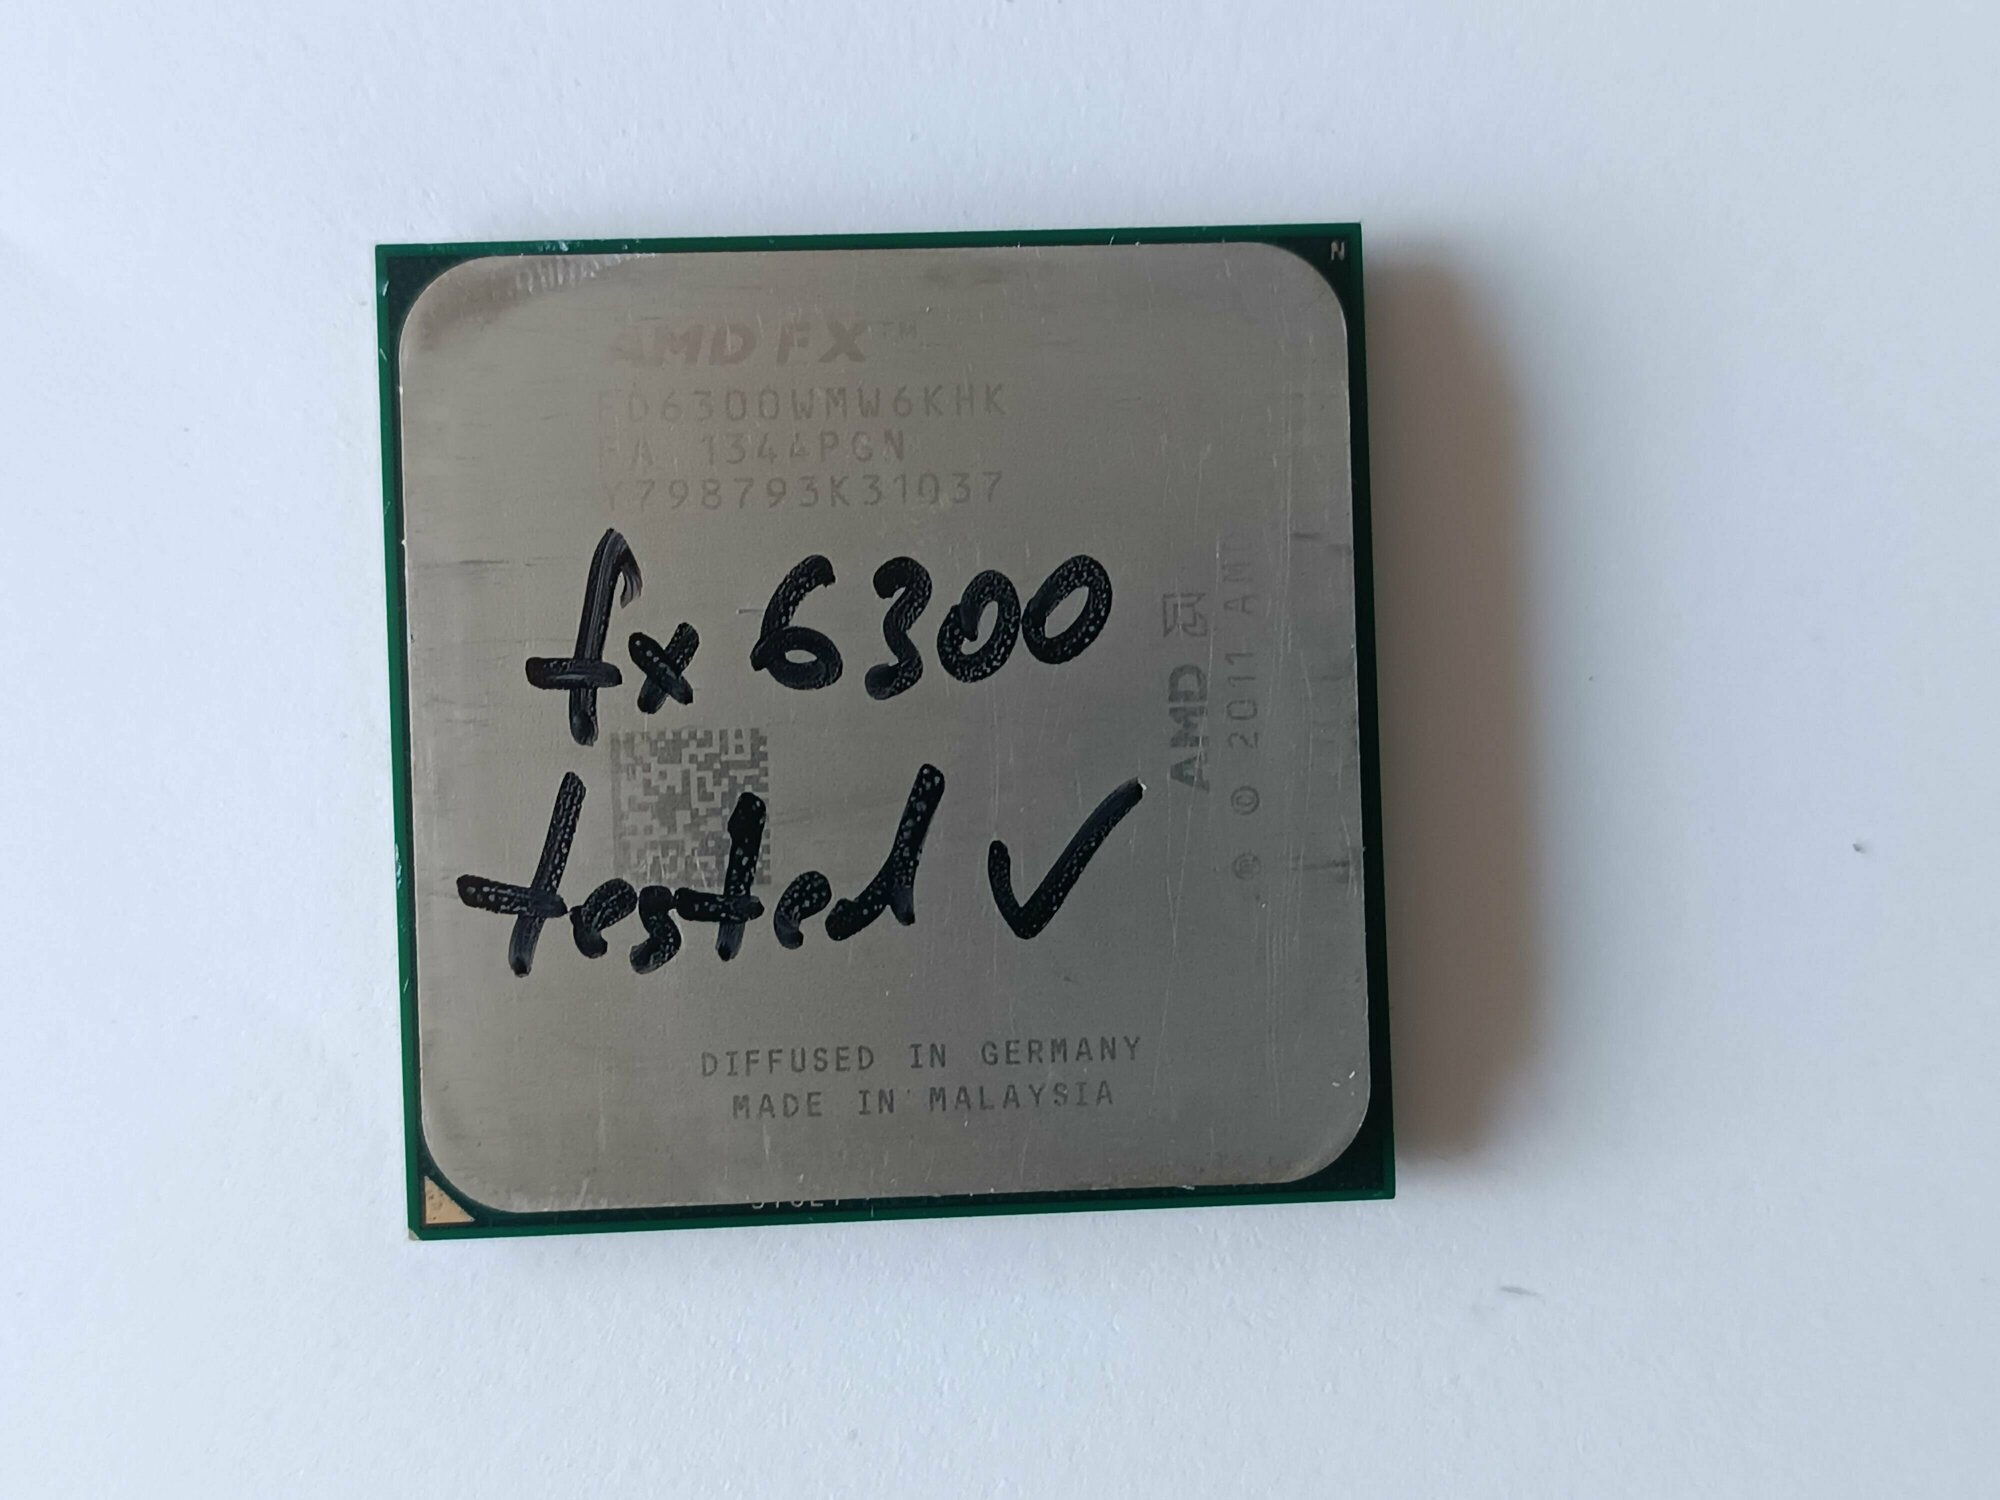 Процессор AMD FX-6300 AM3+ 6 x 3500 МГц